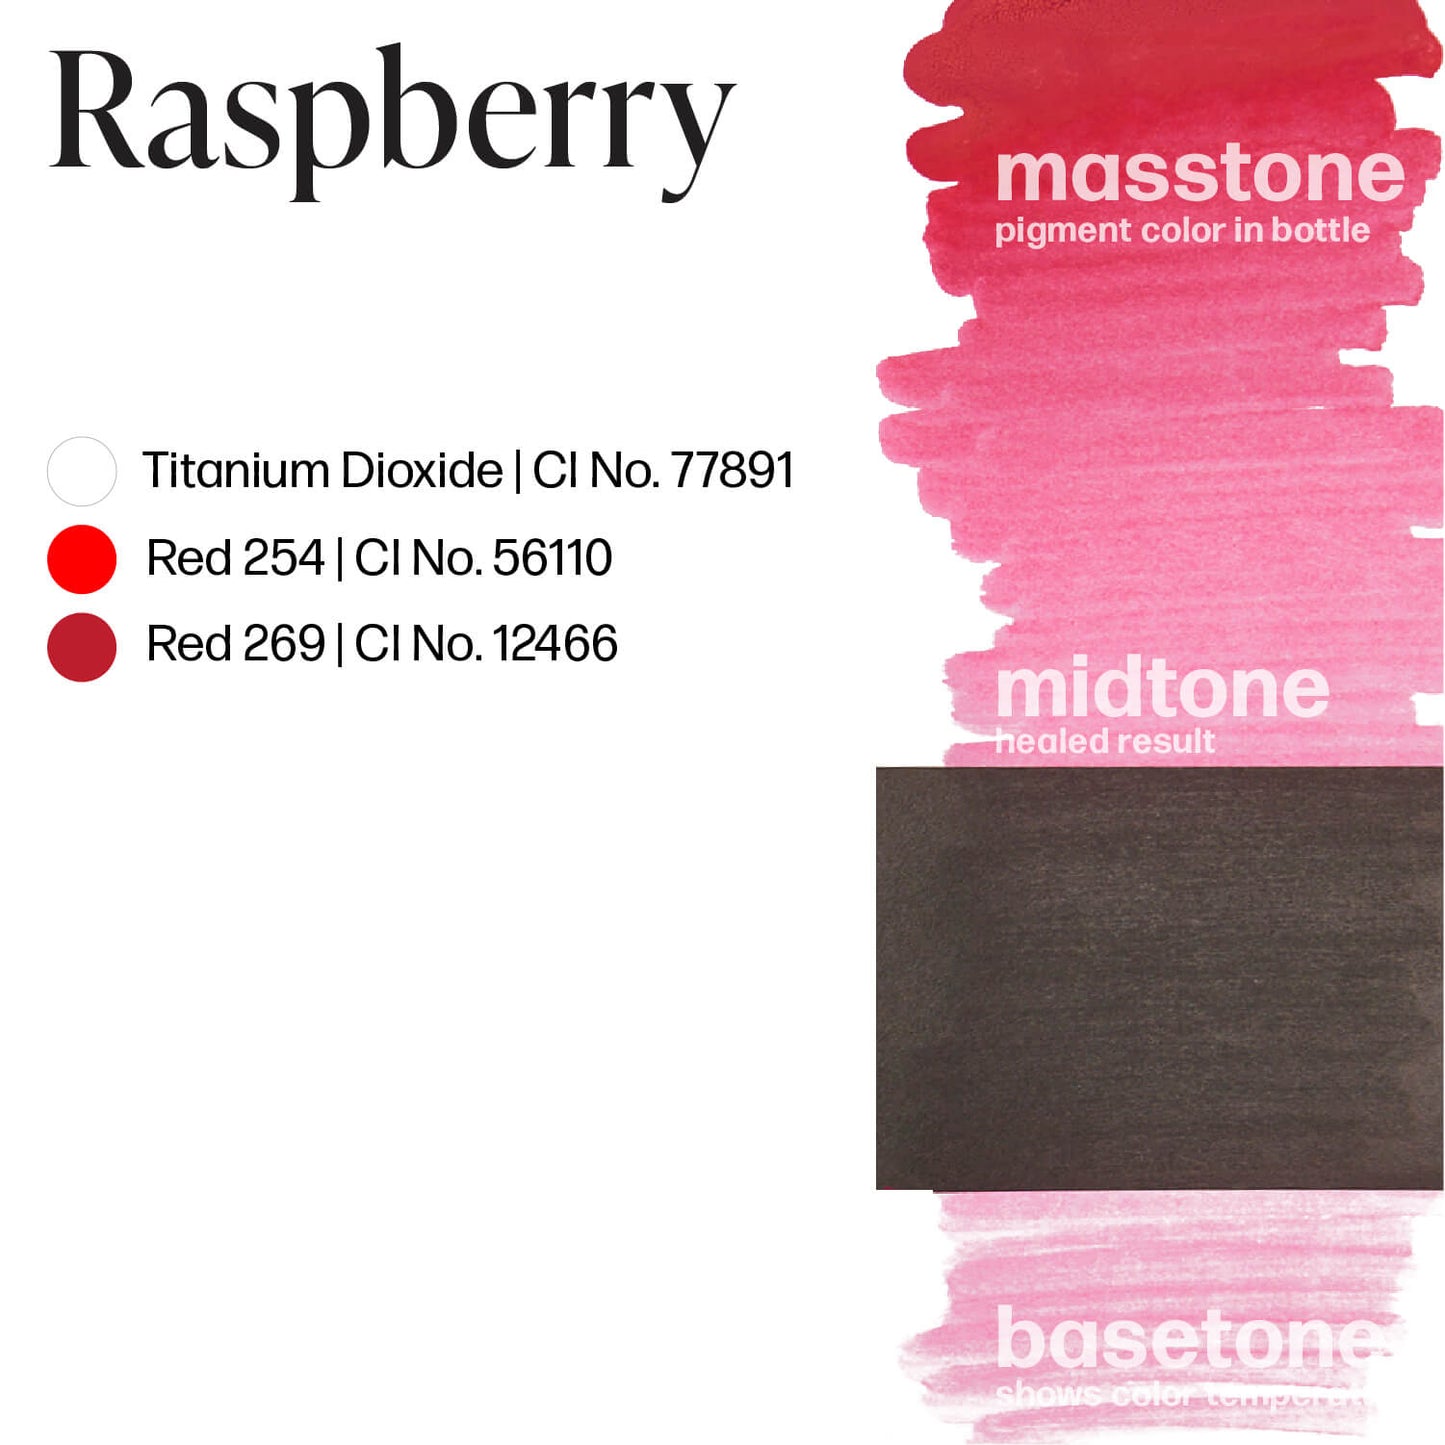 Perma Blend Raspberry Lip Blush Ink Drawdown Masstone Midtone Basetone